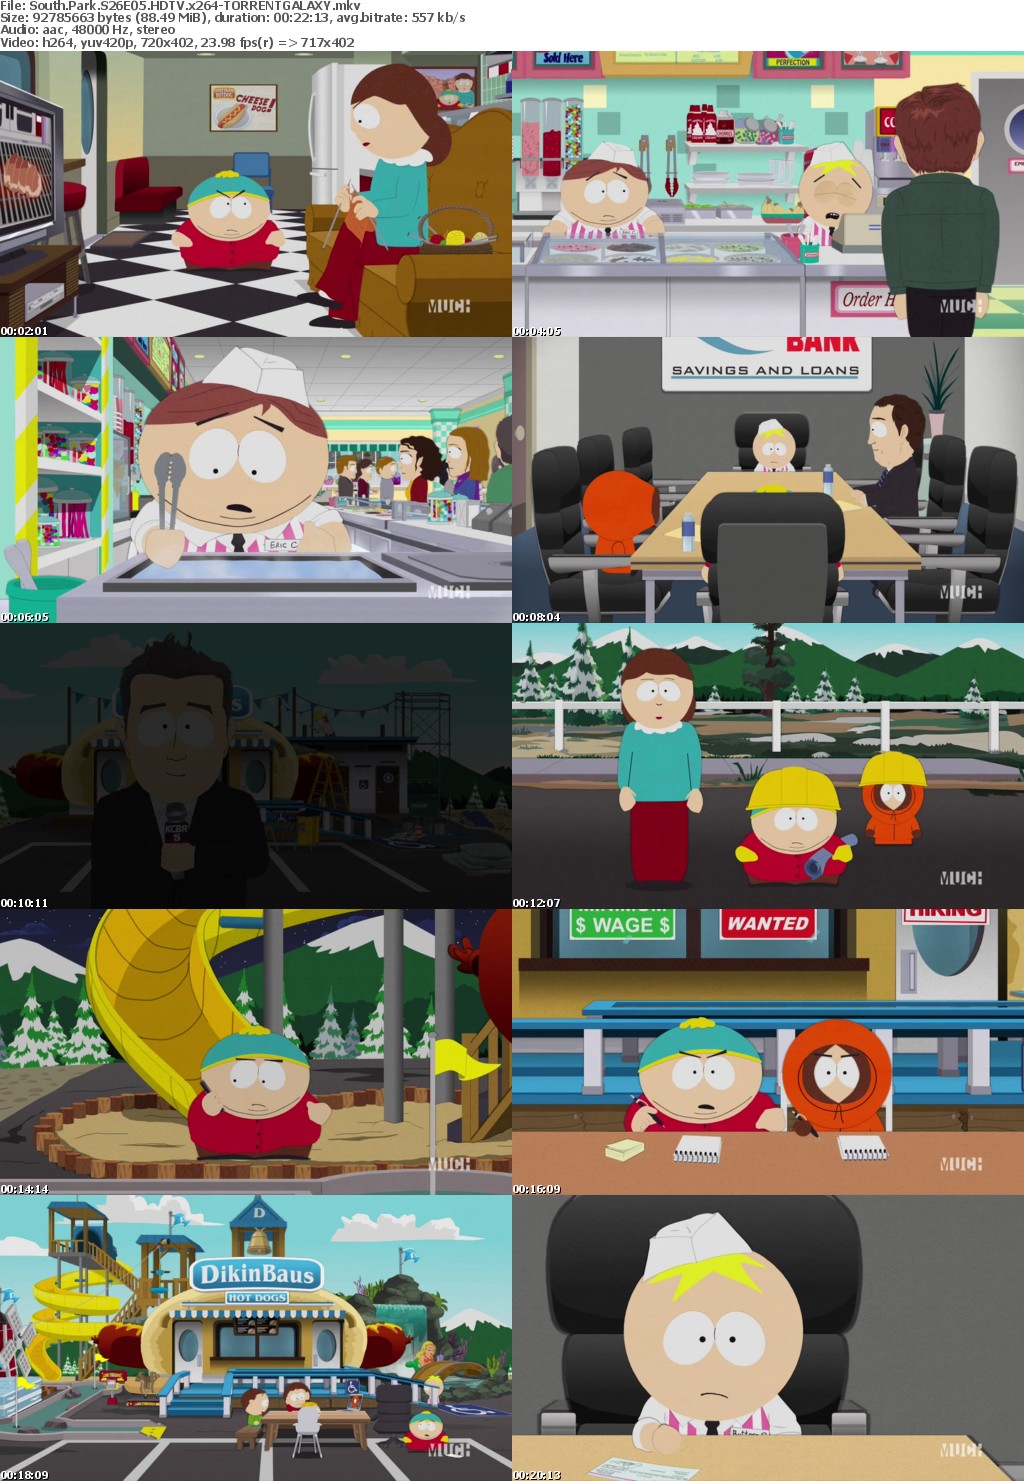 South Park S26E05 HDTV x264-GALAXY